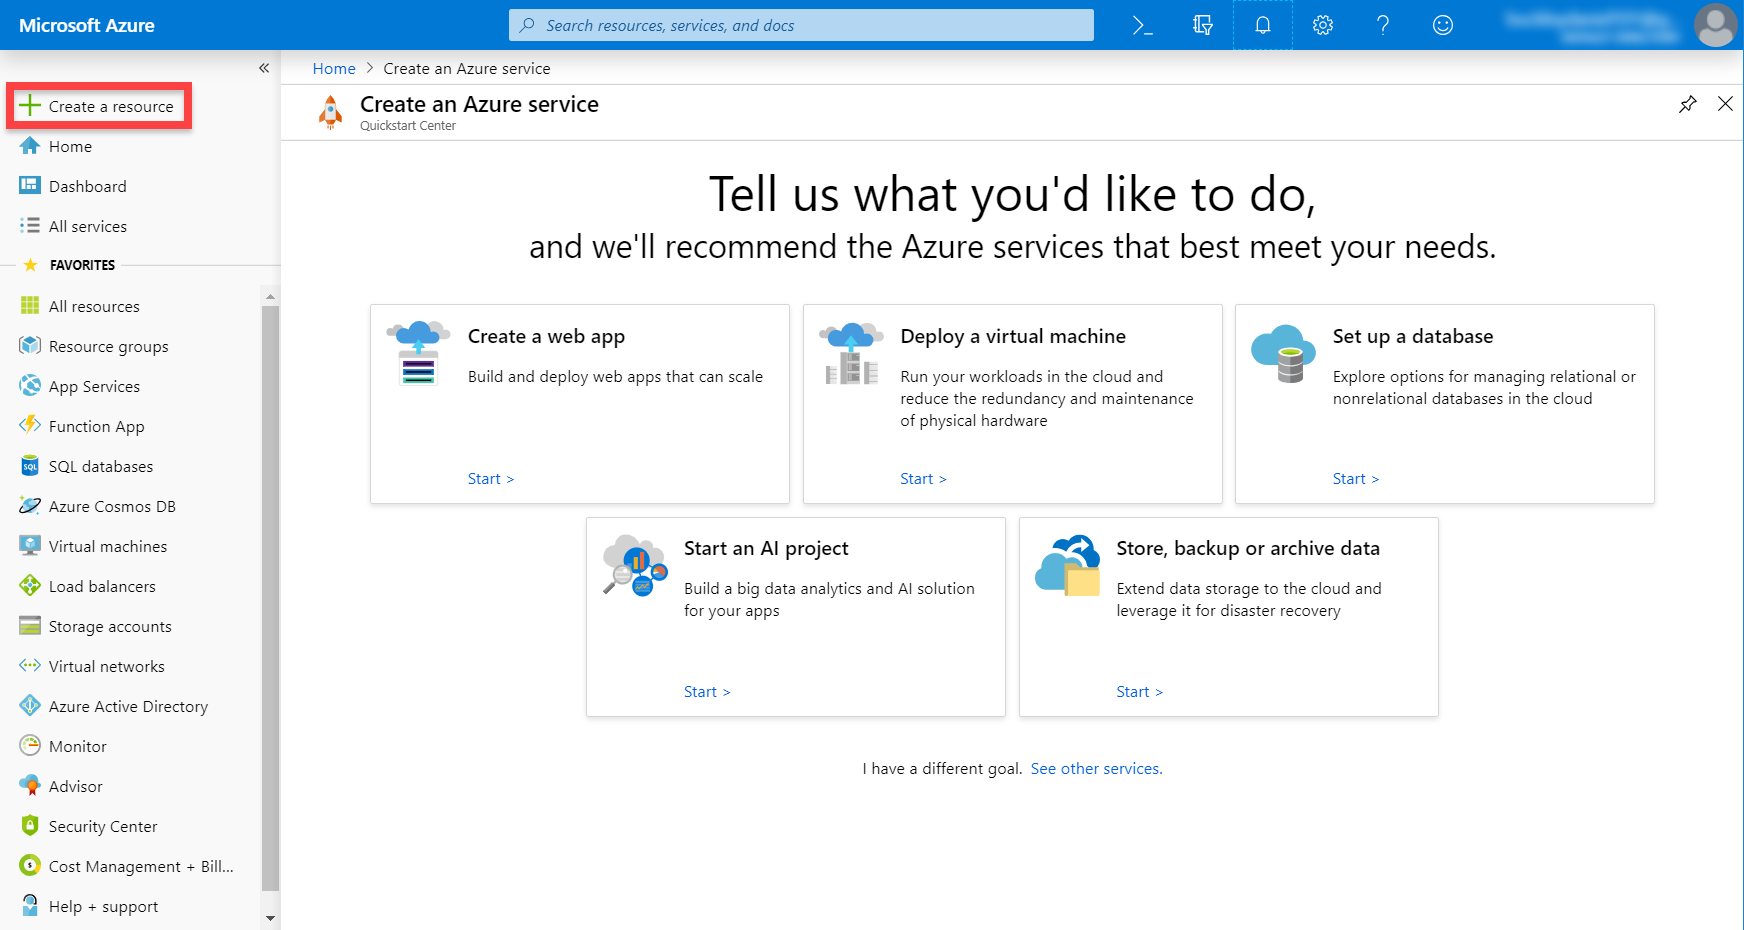 Microsoft Azure dashboard for creating a service